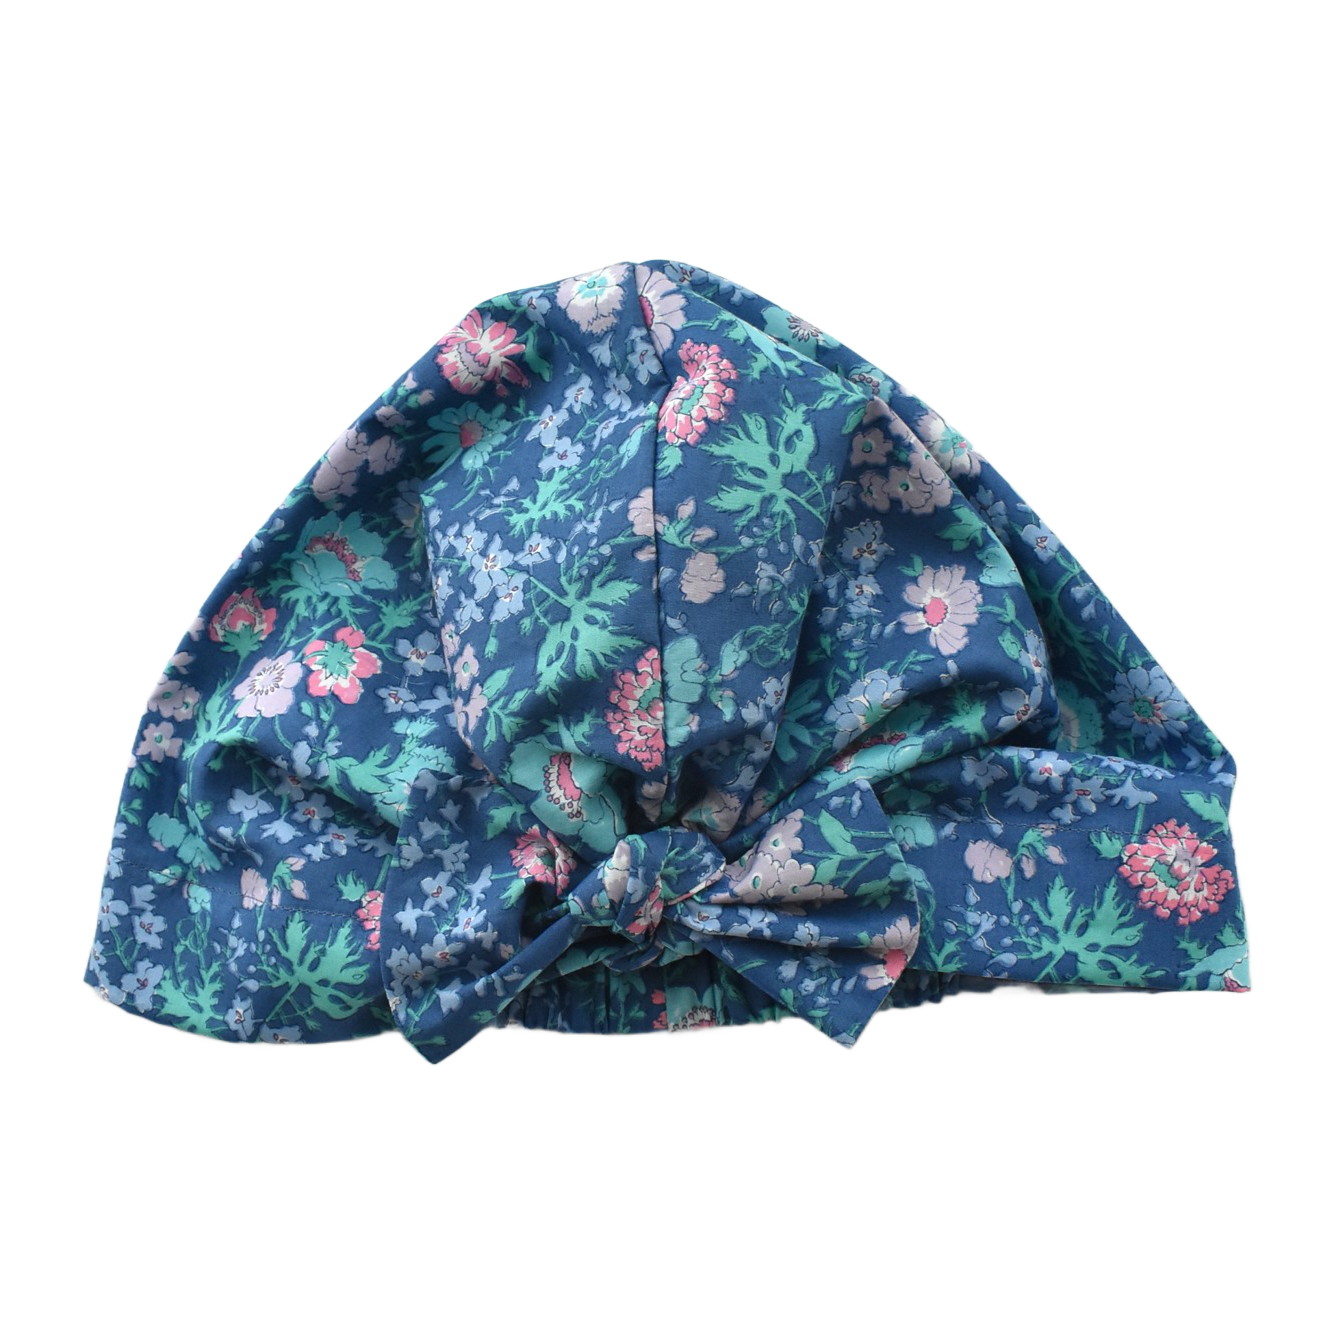 Ladies Turban Hat - Vintage Liberty Blue Floral